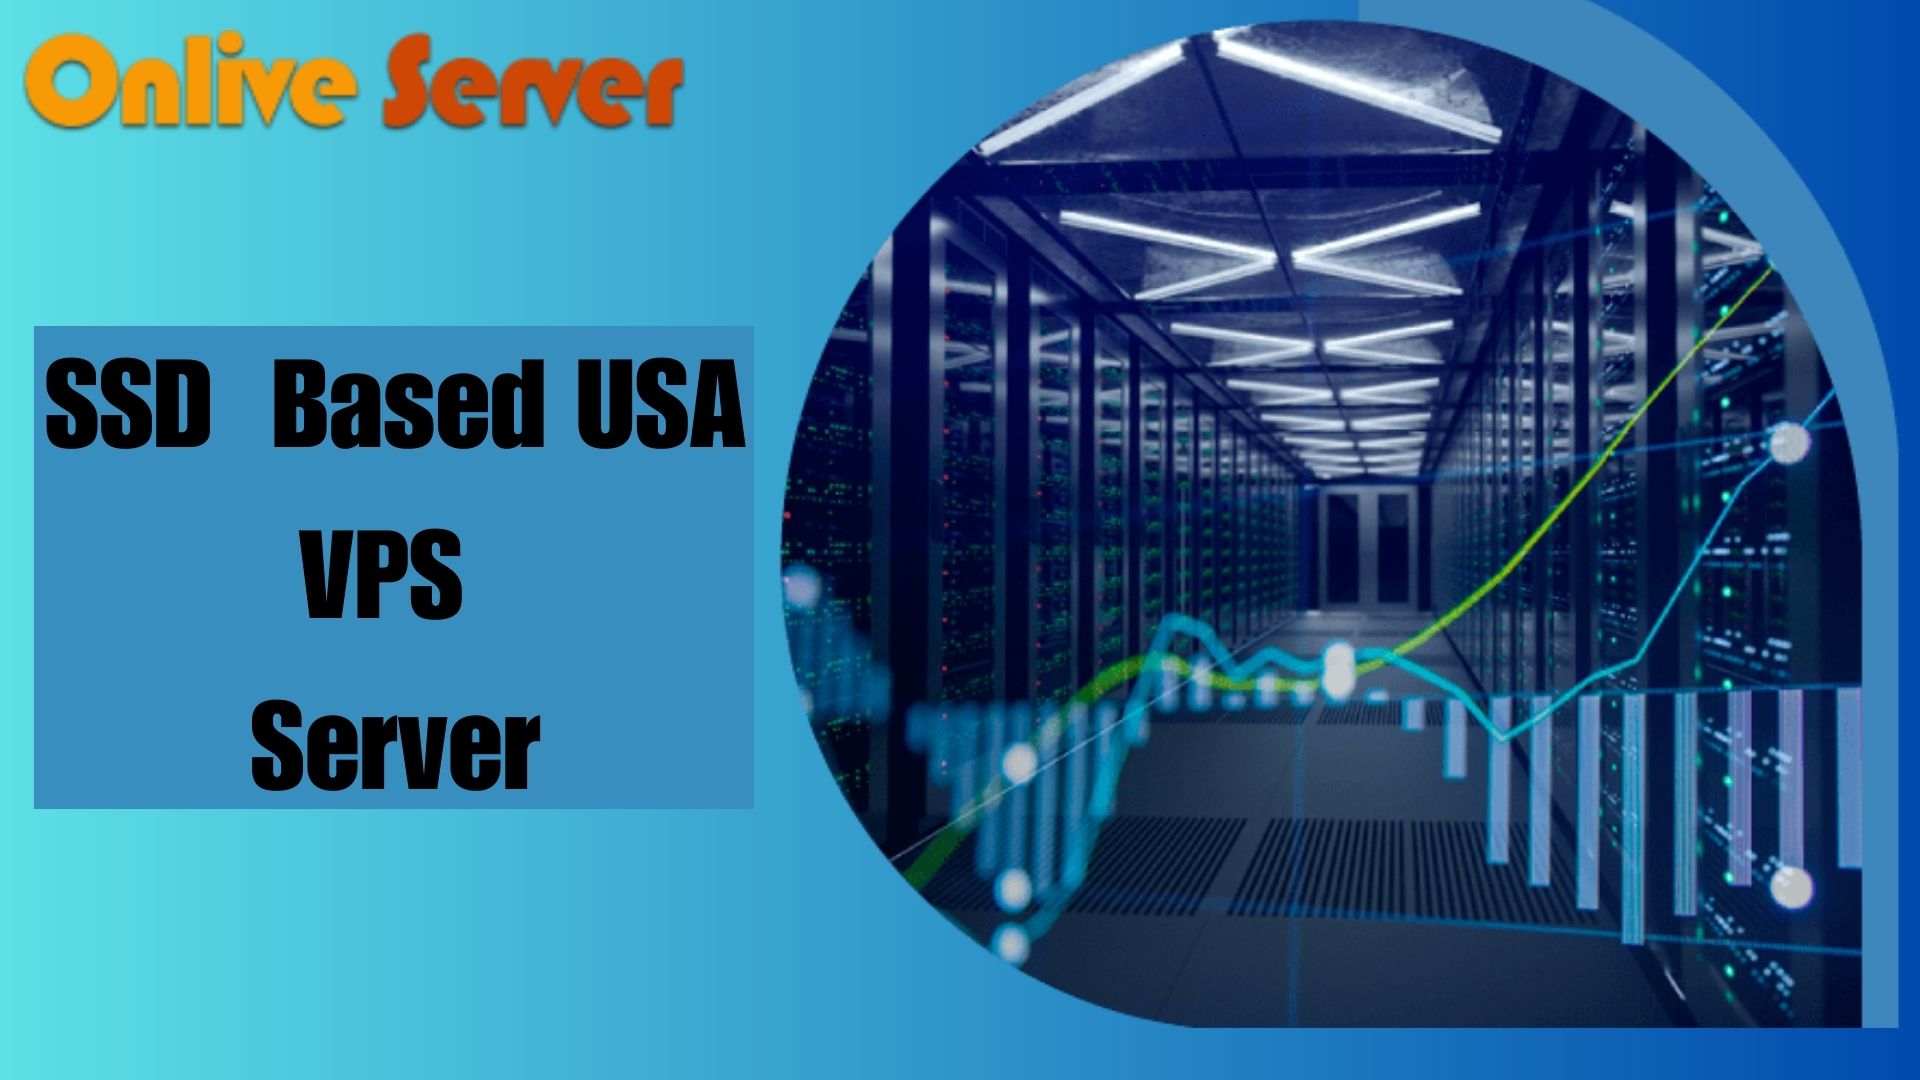 SSD based USA VPS Server